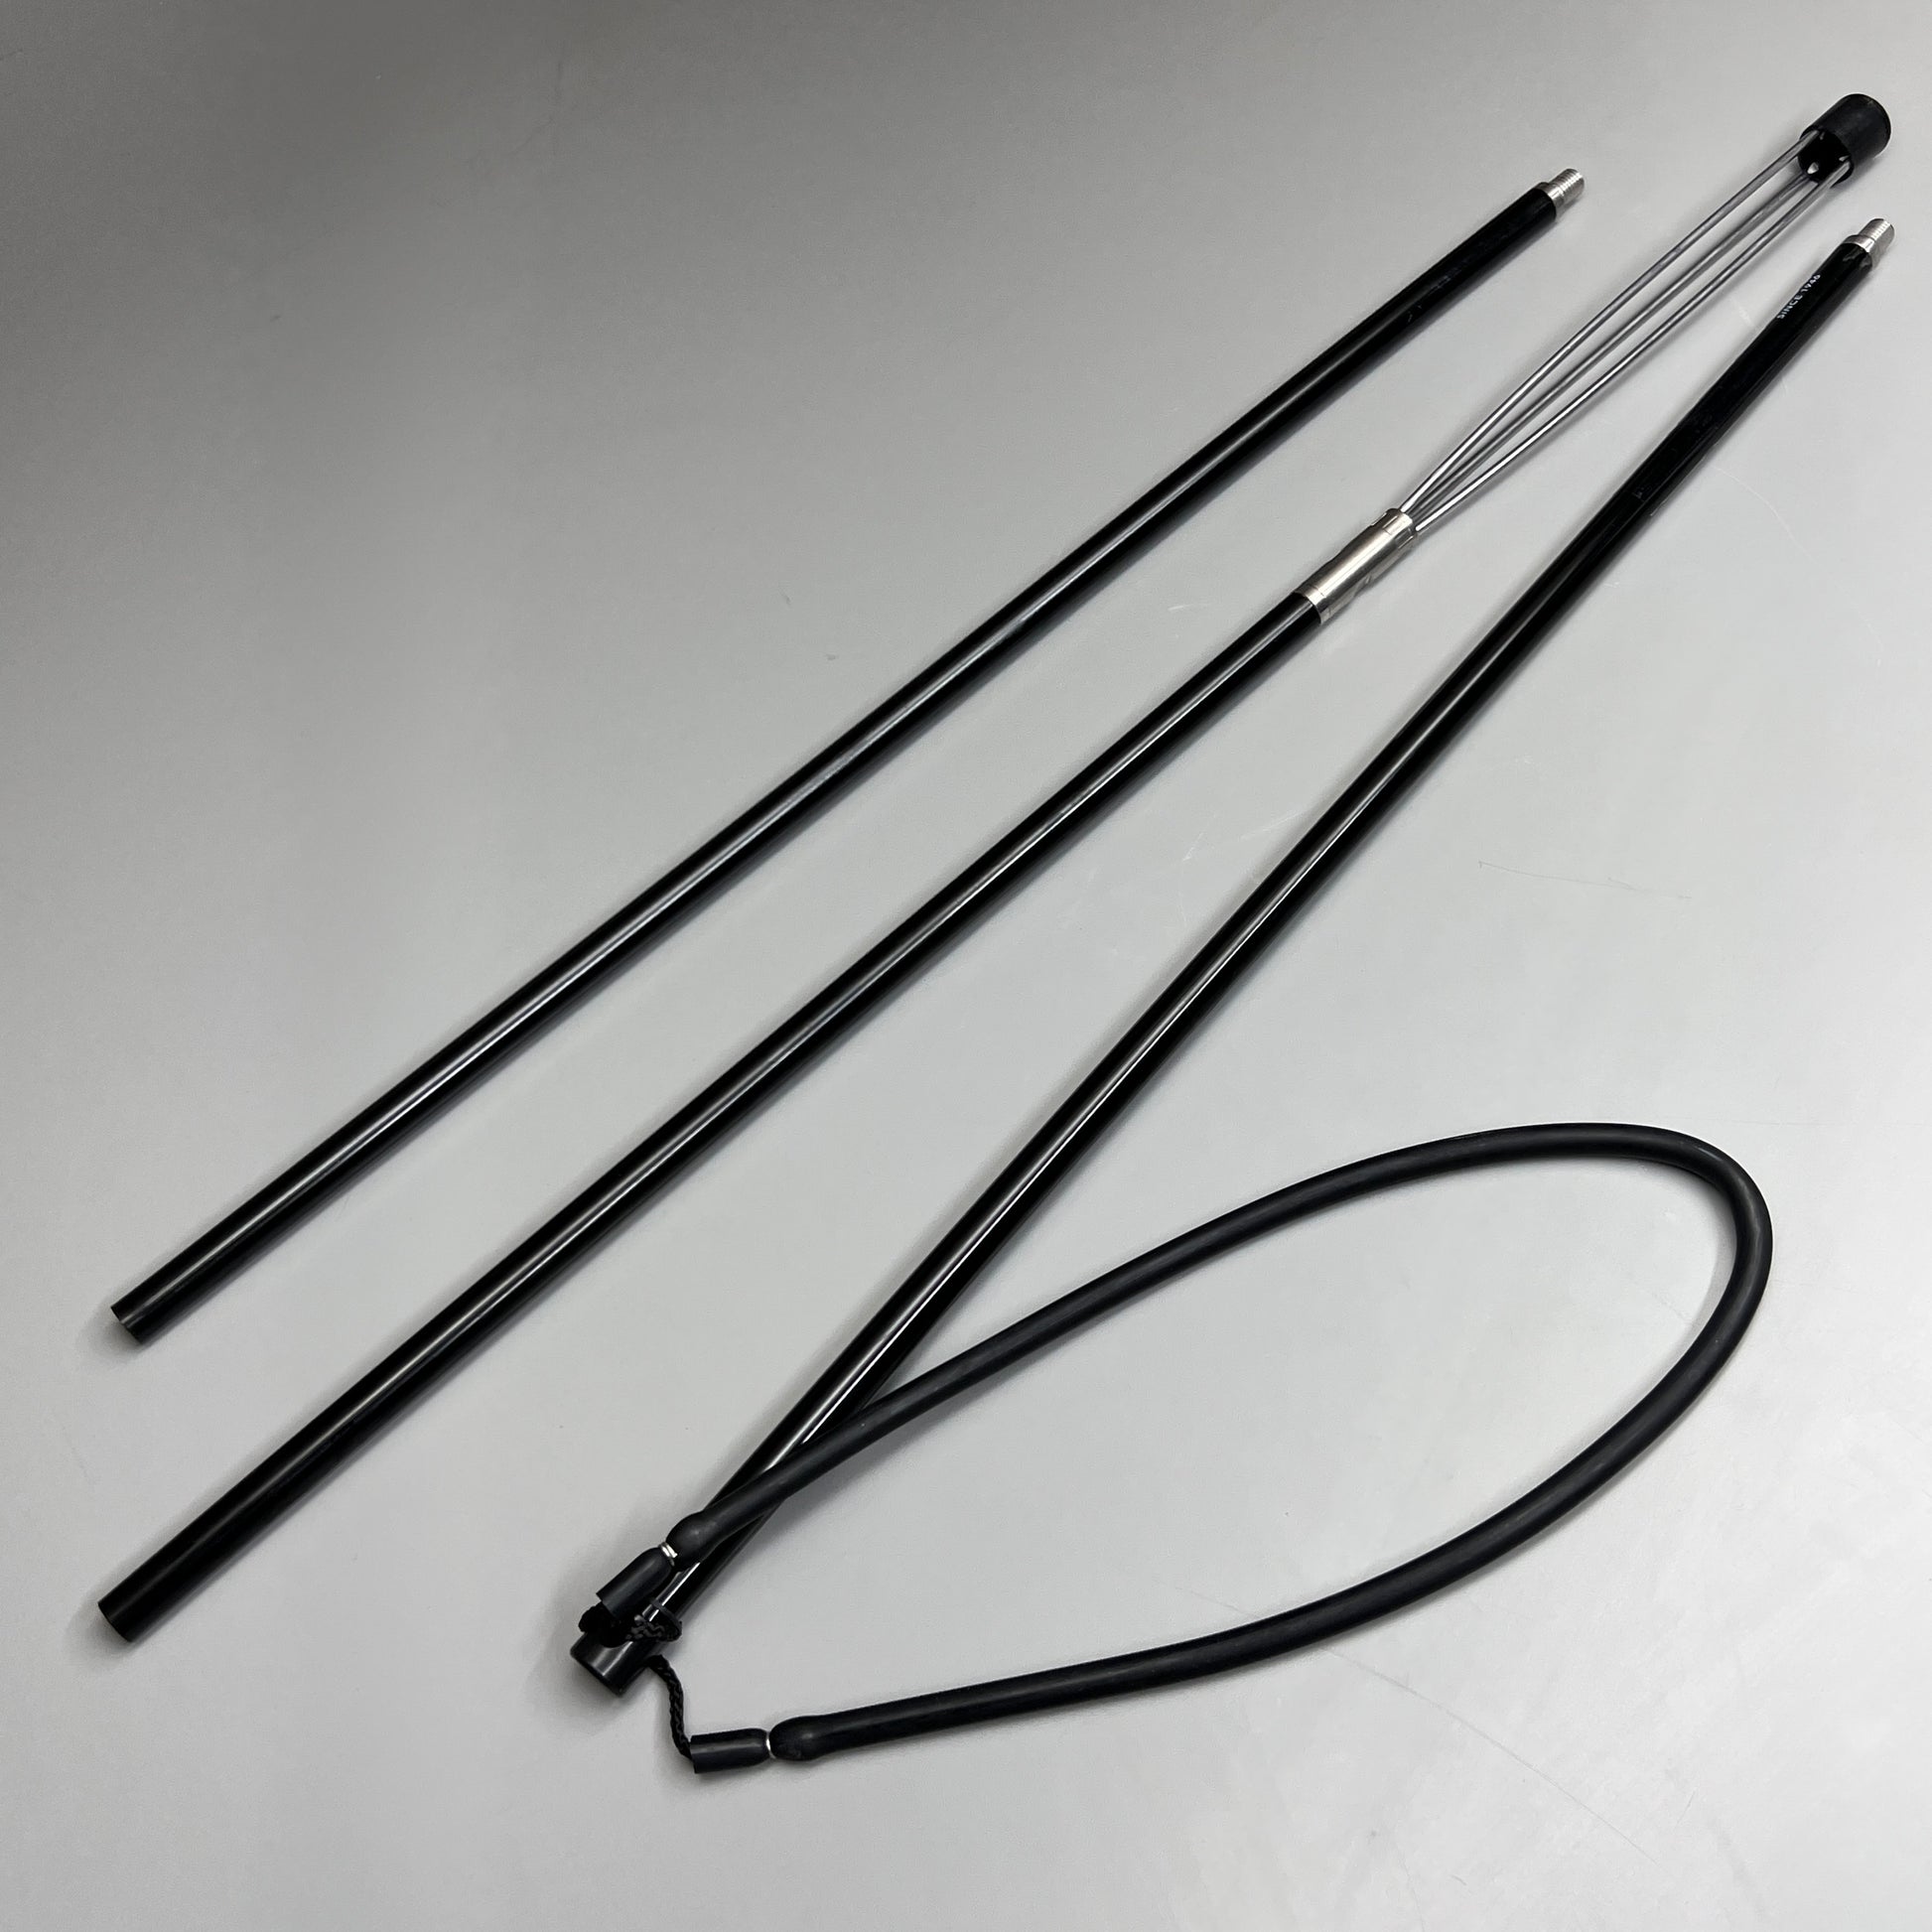 CRESSI Aluminum Pole Spear w/ Paralyzer Tip 3pcs - 6.0 ft Black